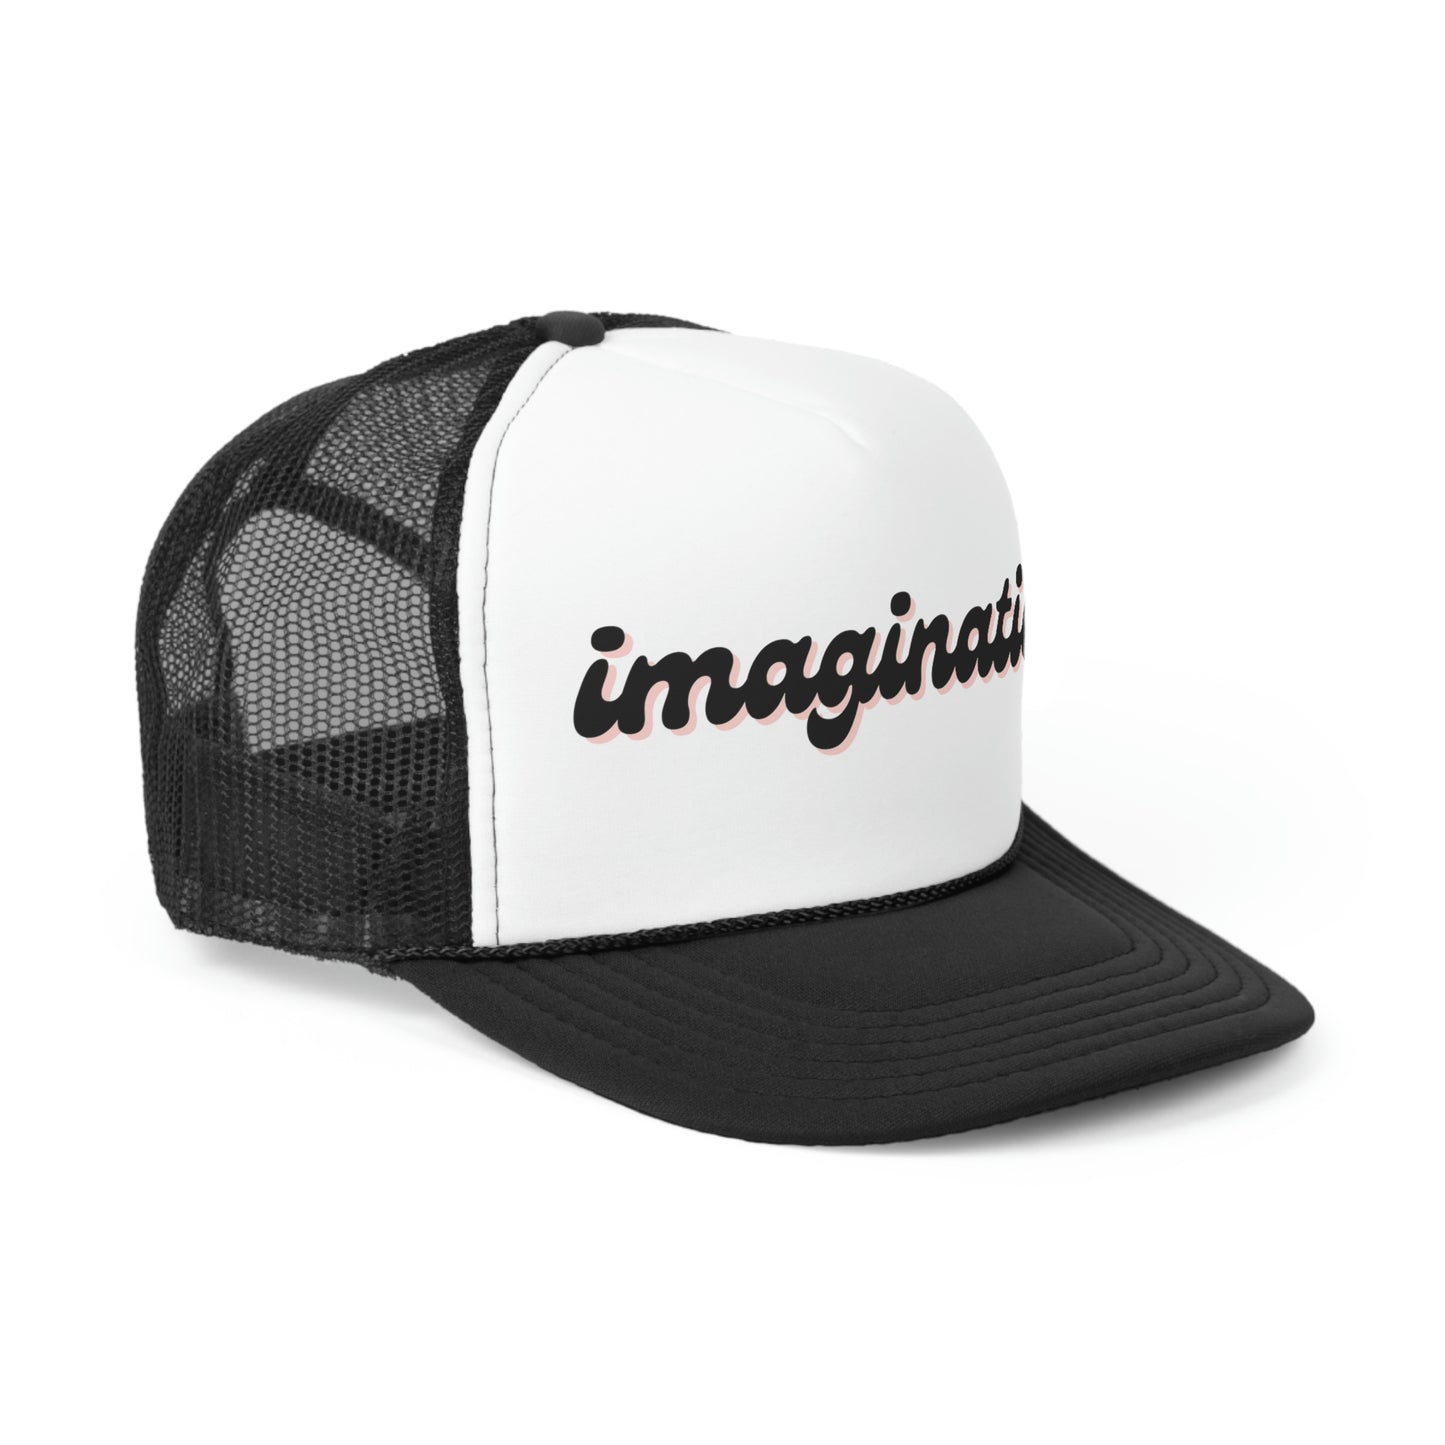 Freed's Creative Imagination Trucker Hat